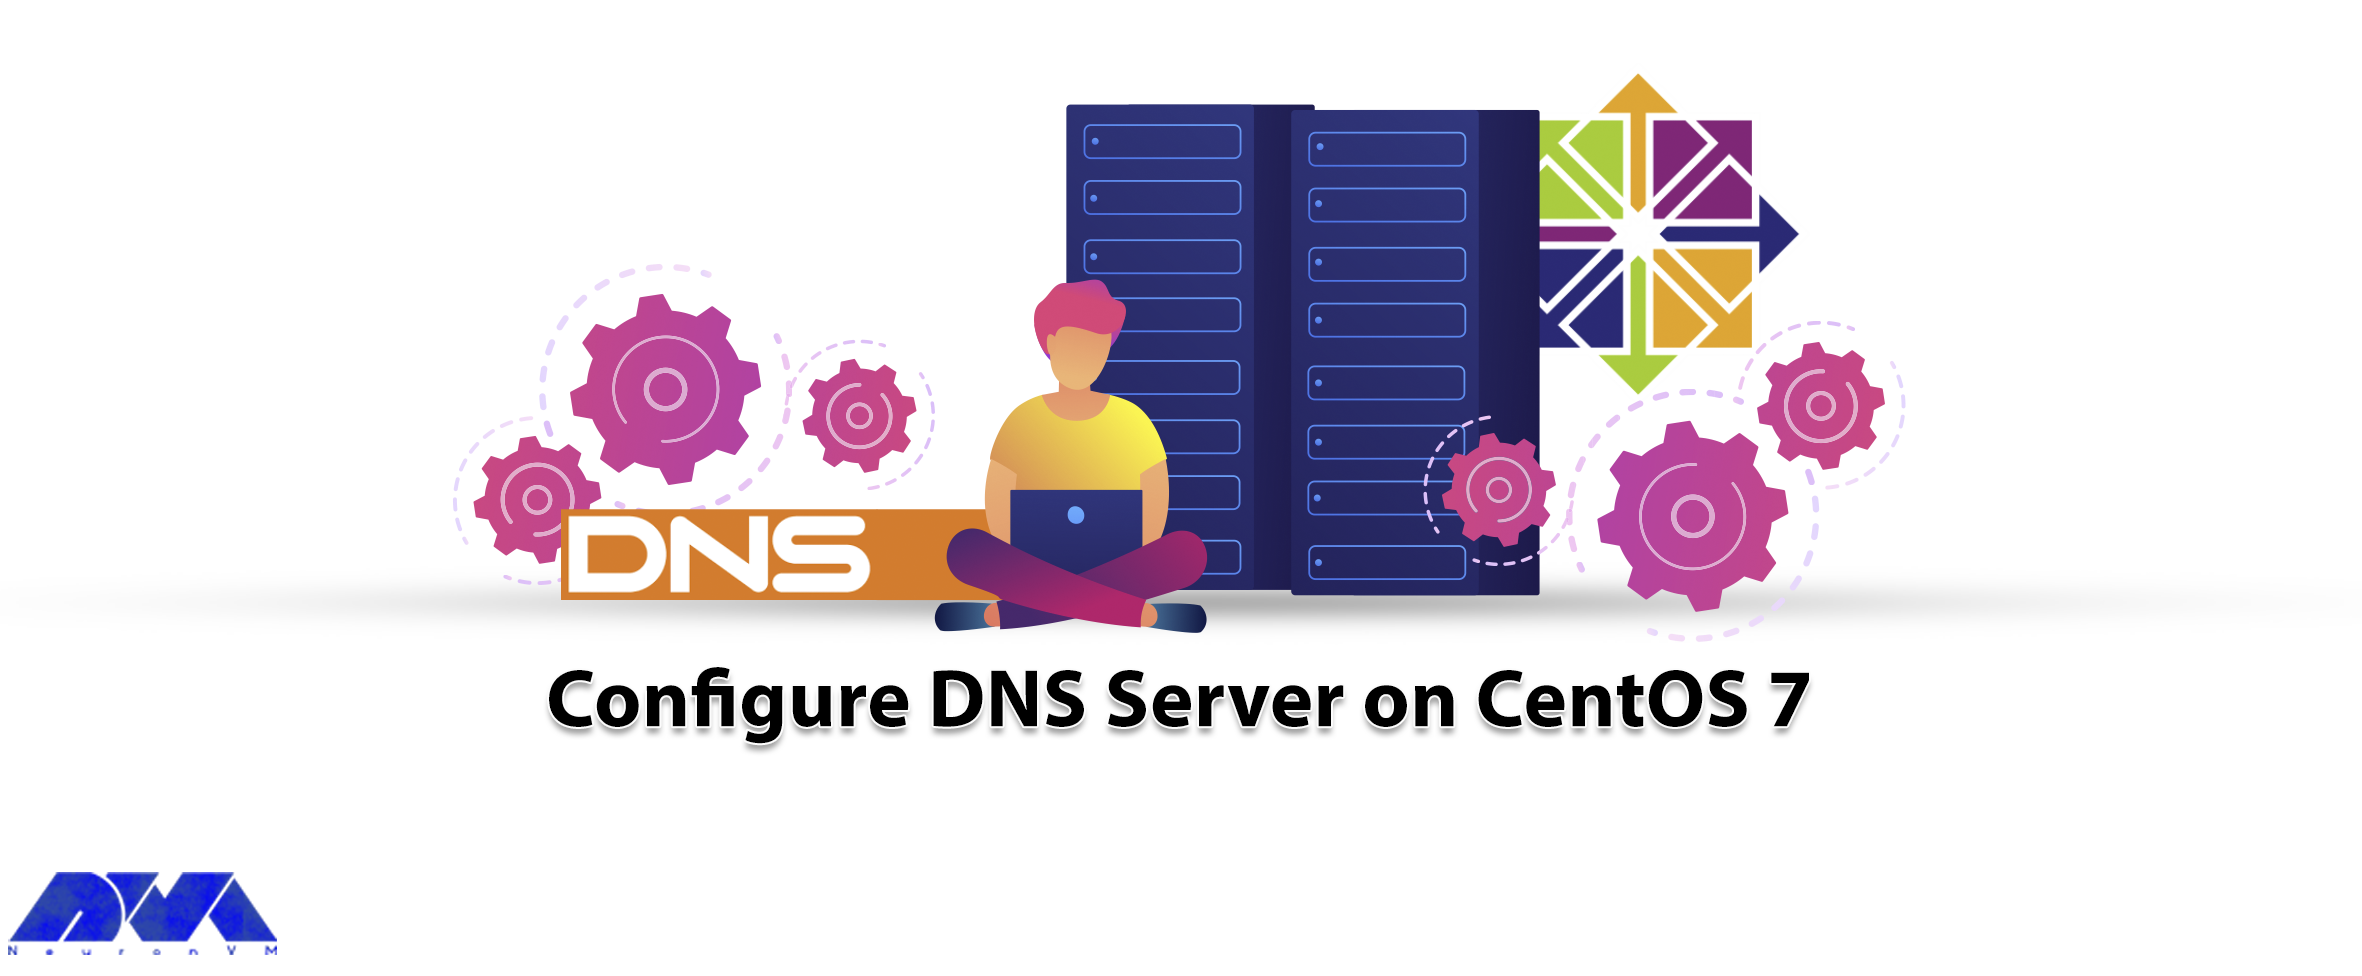 How to Configure DNS Server on CentOS 7 - NeuronVM